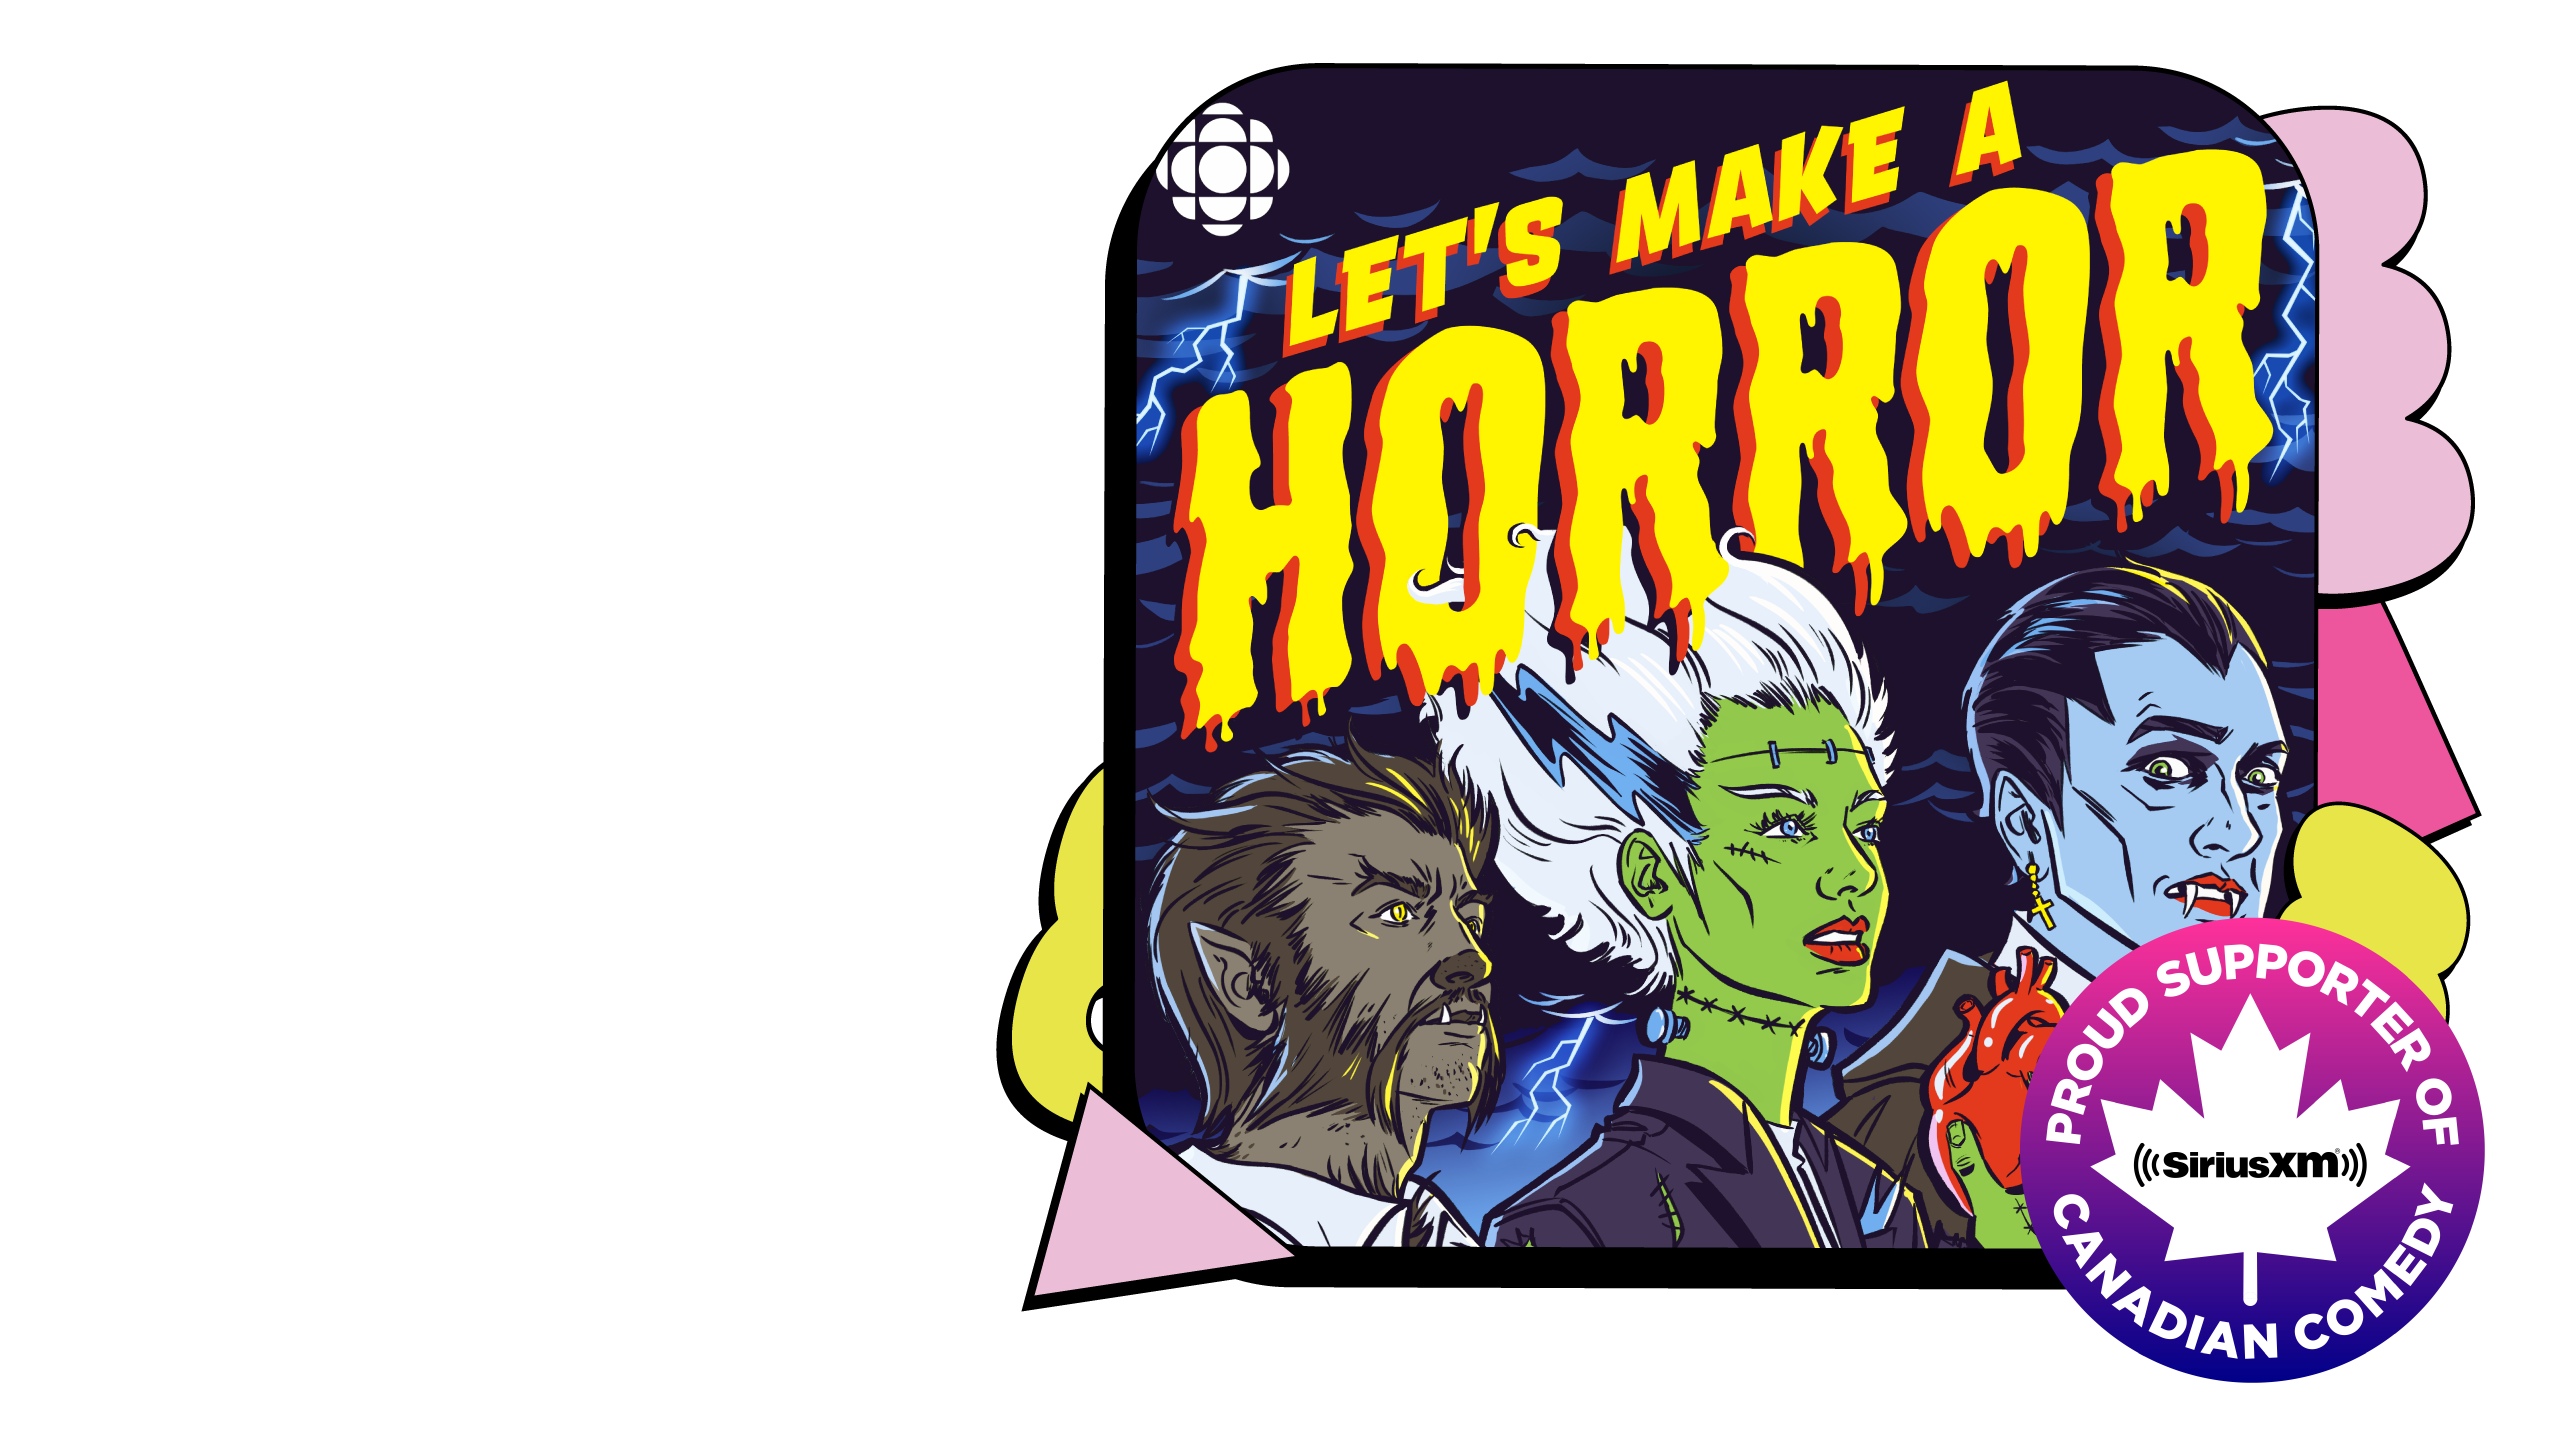 Promotional image for Let's Make a Horror